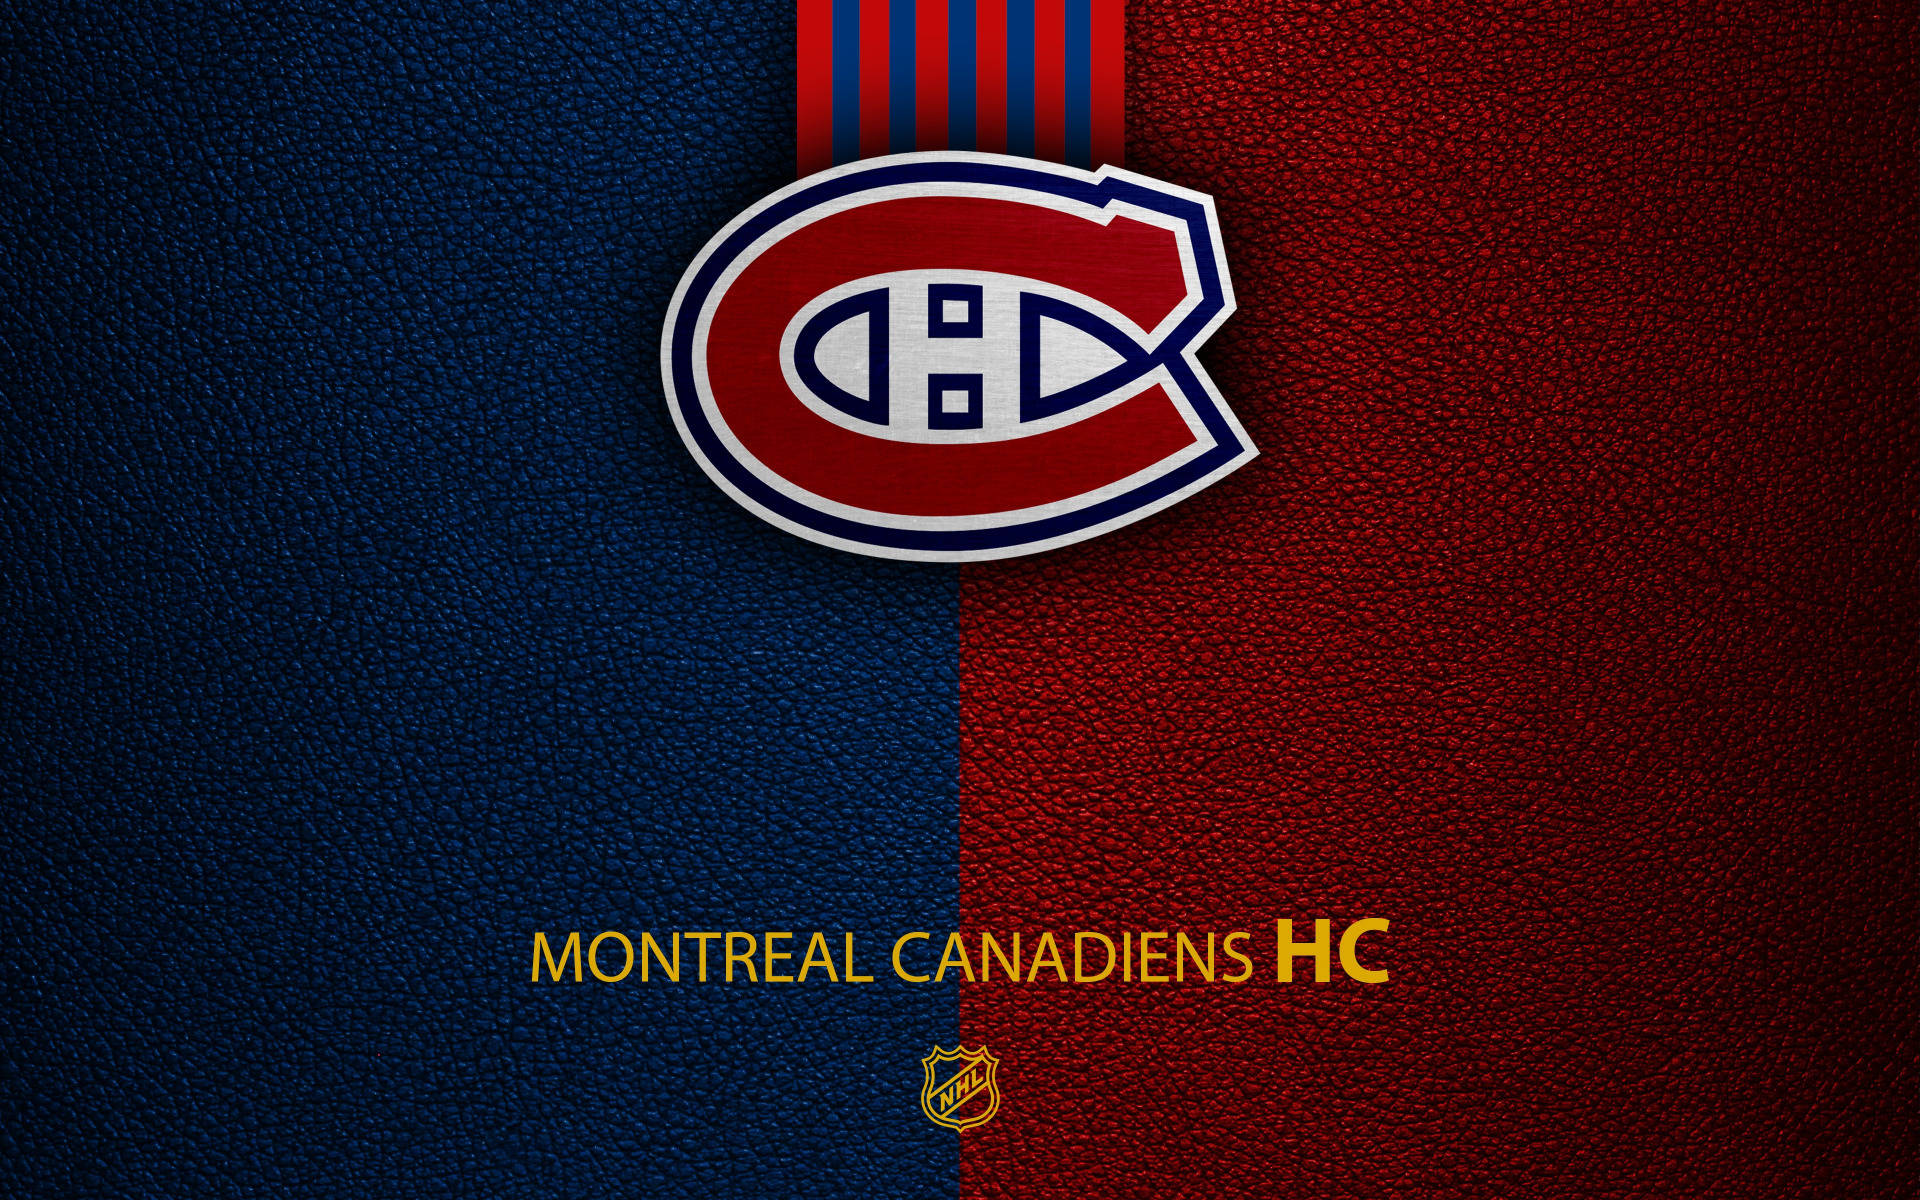 Ice Hockey Team Montreal Canadiens